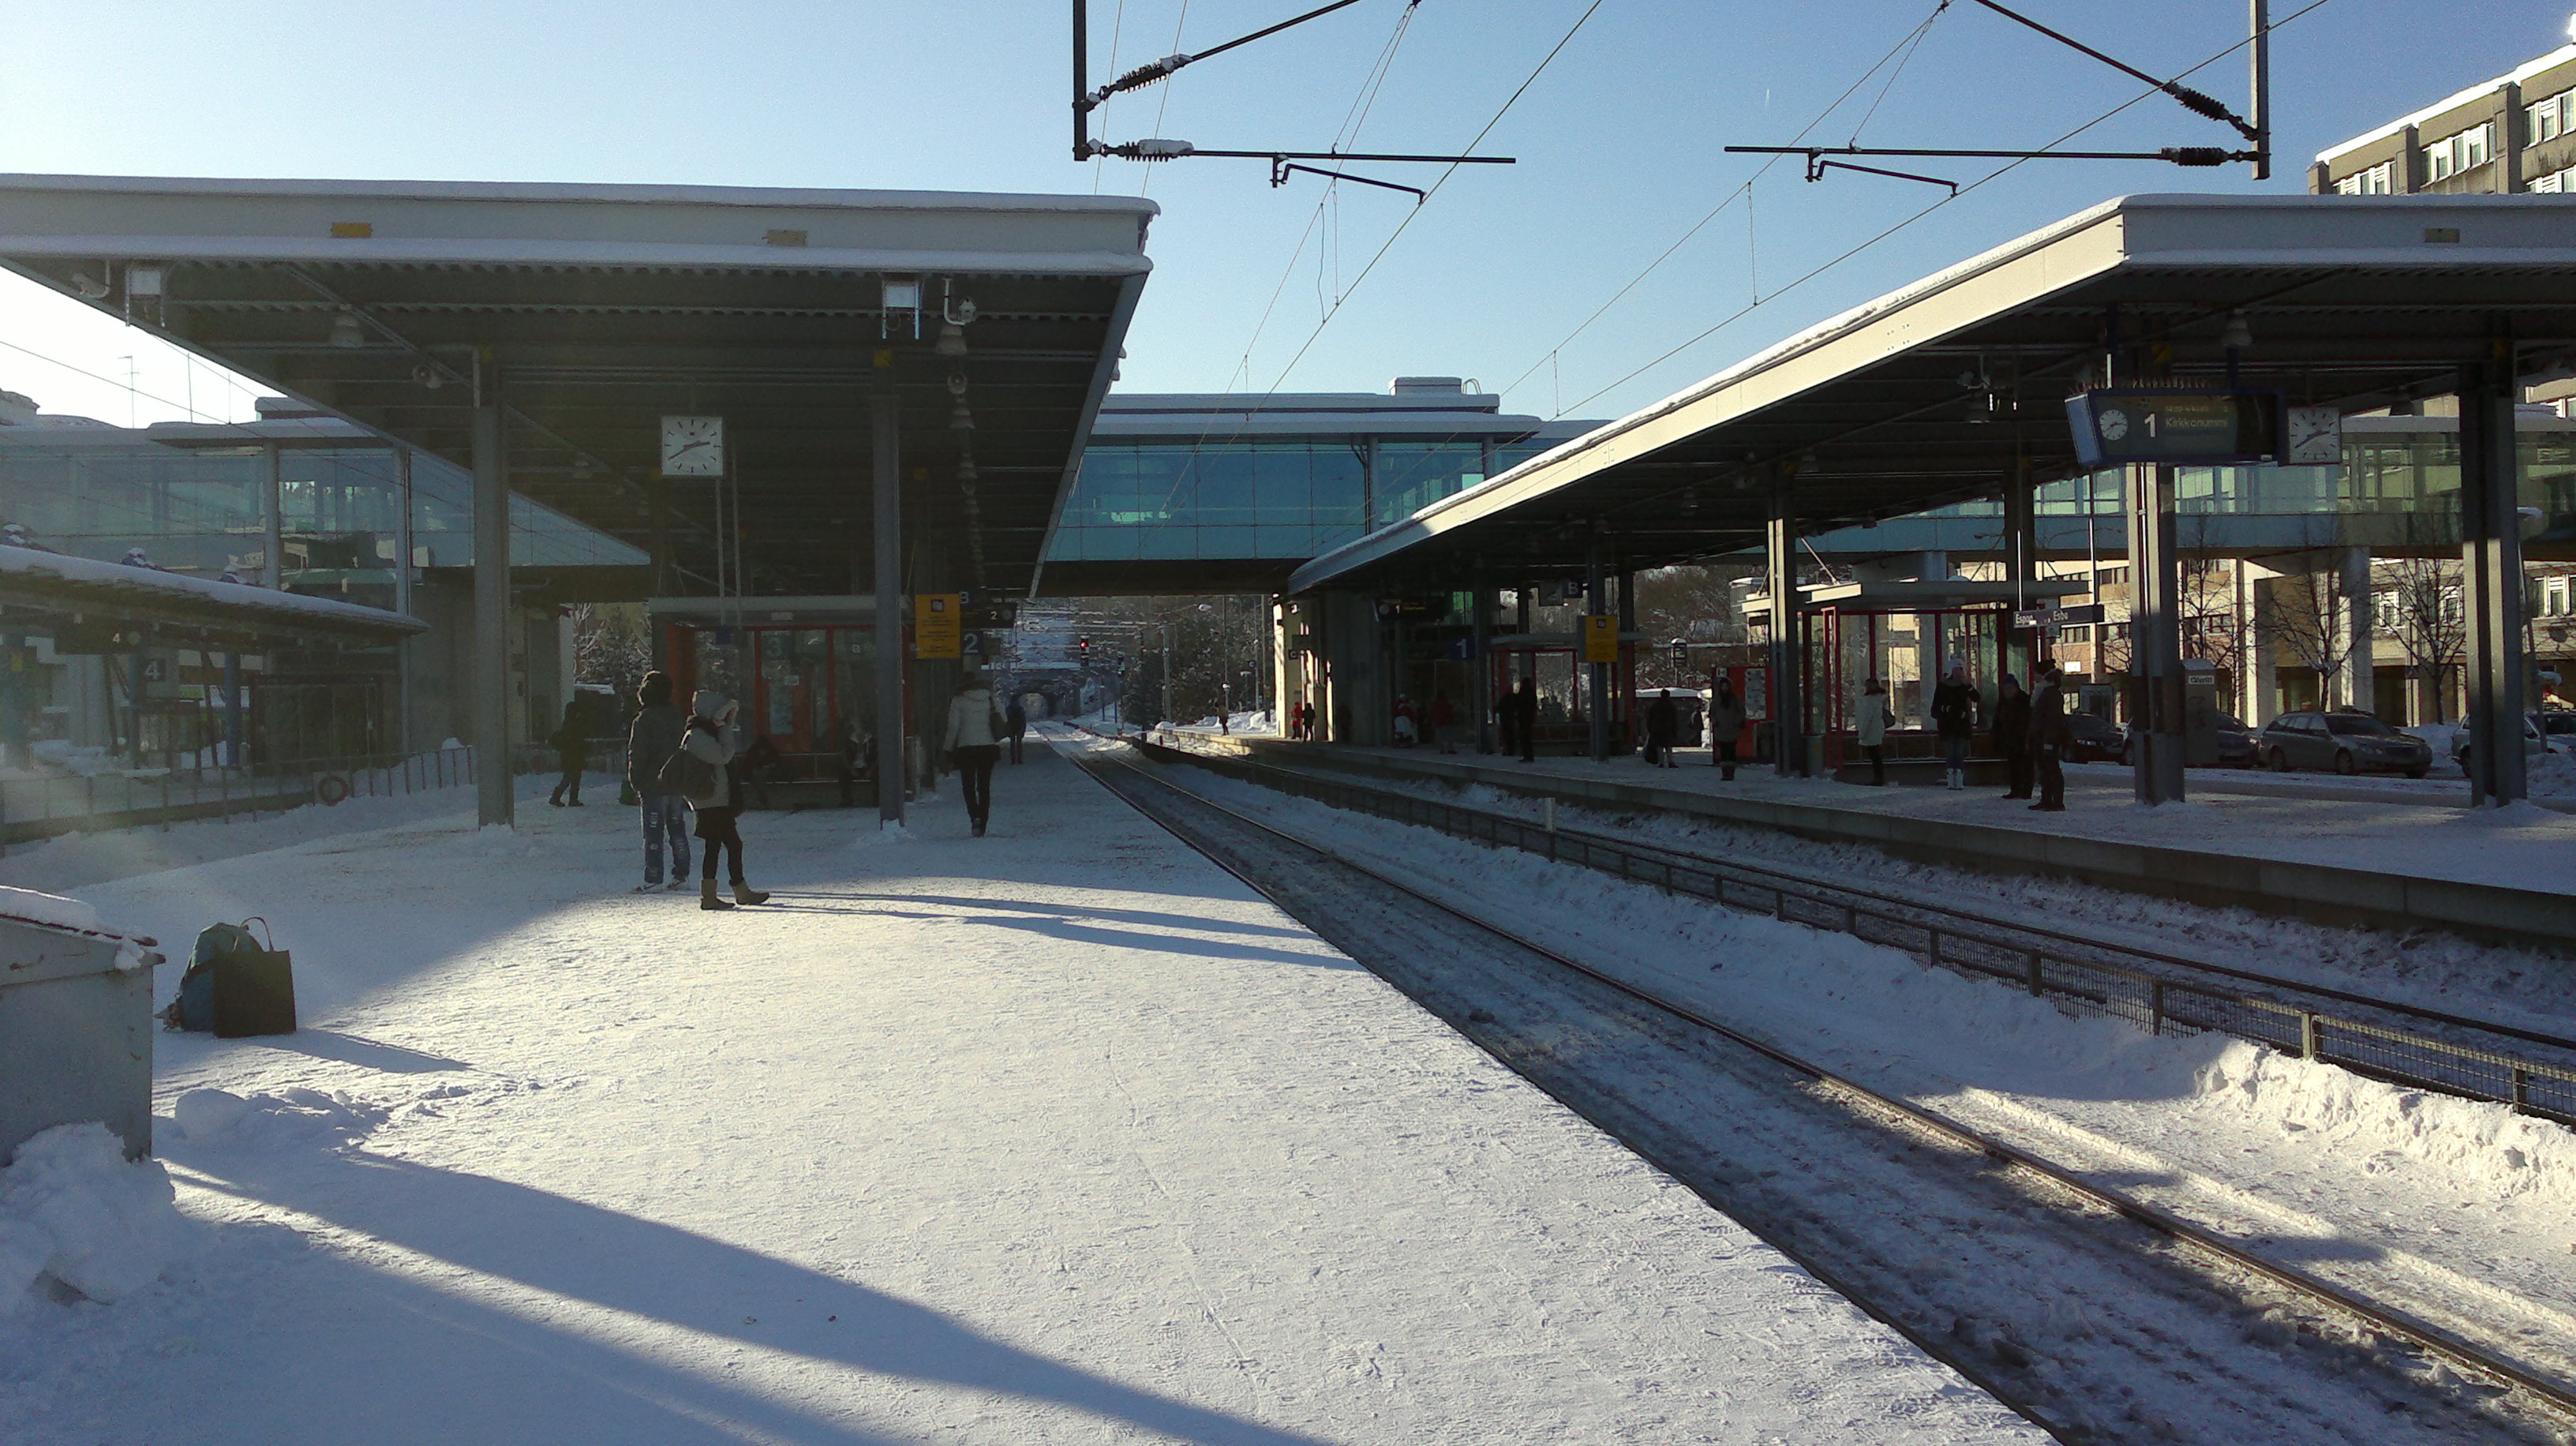 File:Espoo city train station.jpg - Wikimedia Commons